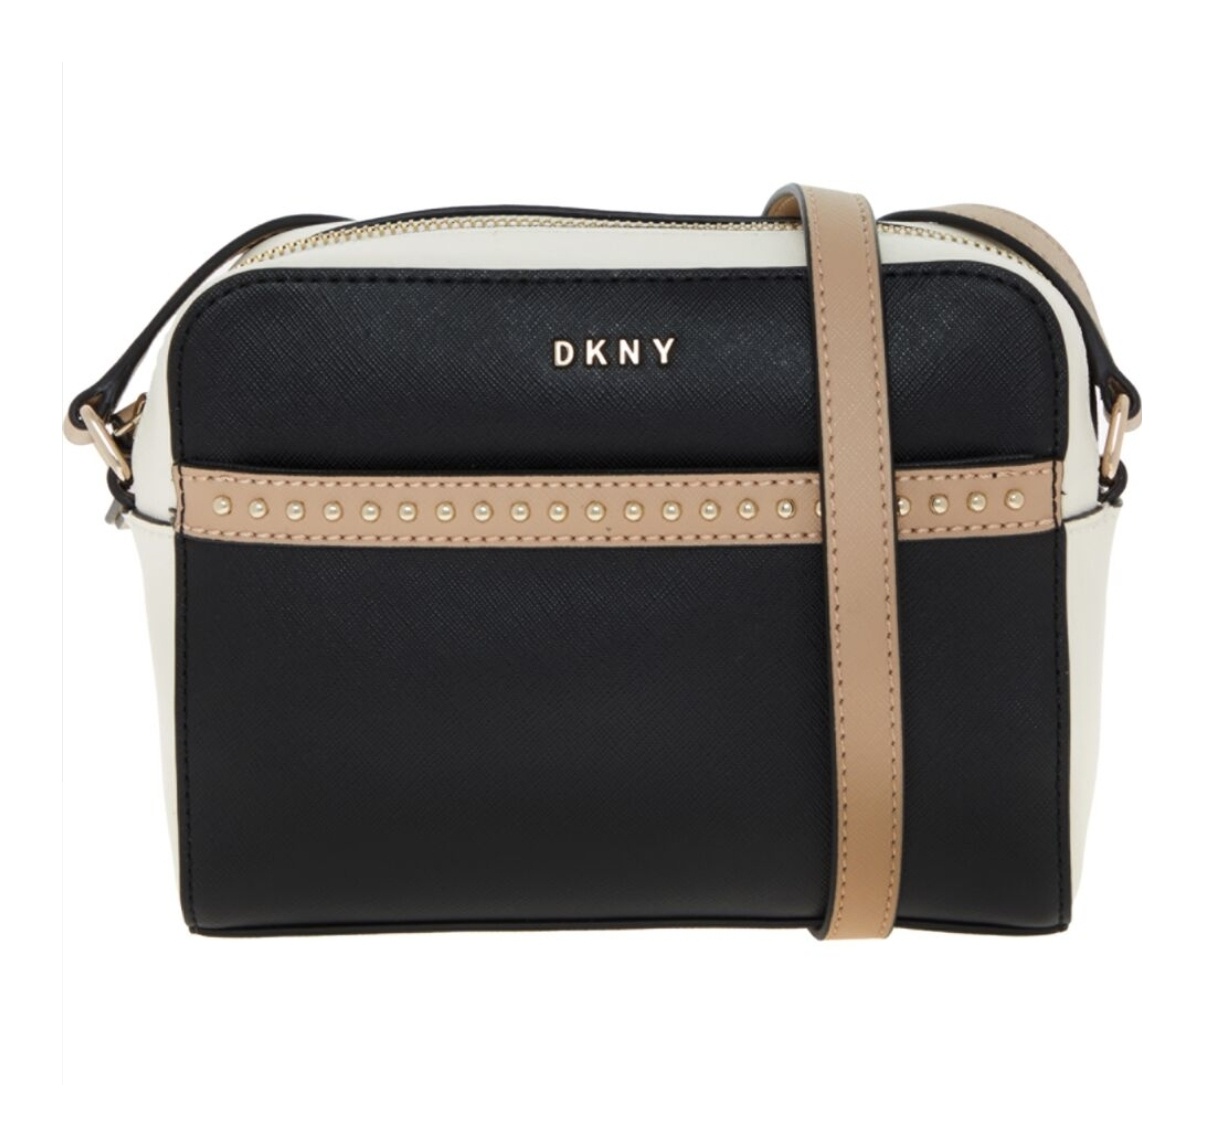 DKNY Top-Zip piccolo marrone/panna monogram in pelle CrossBody Camera Bag Nuovo di Zecca 